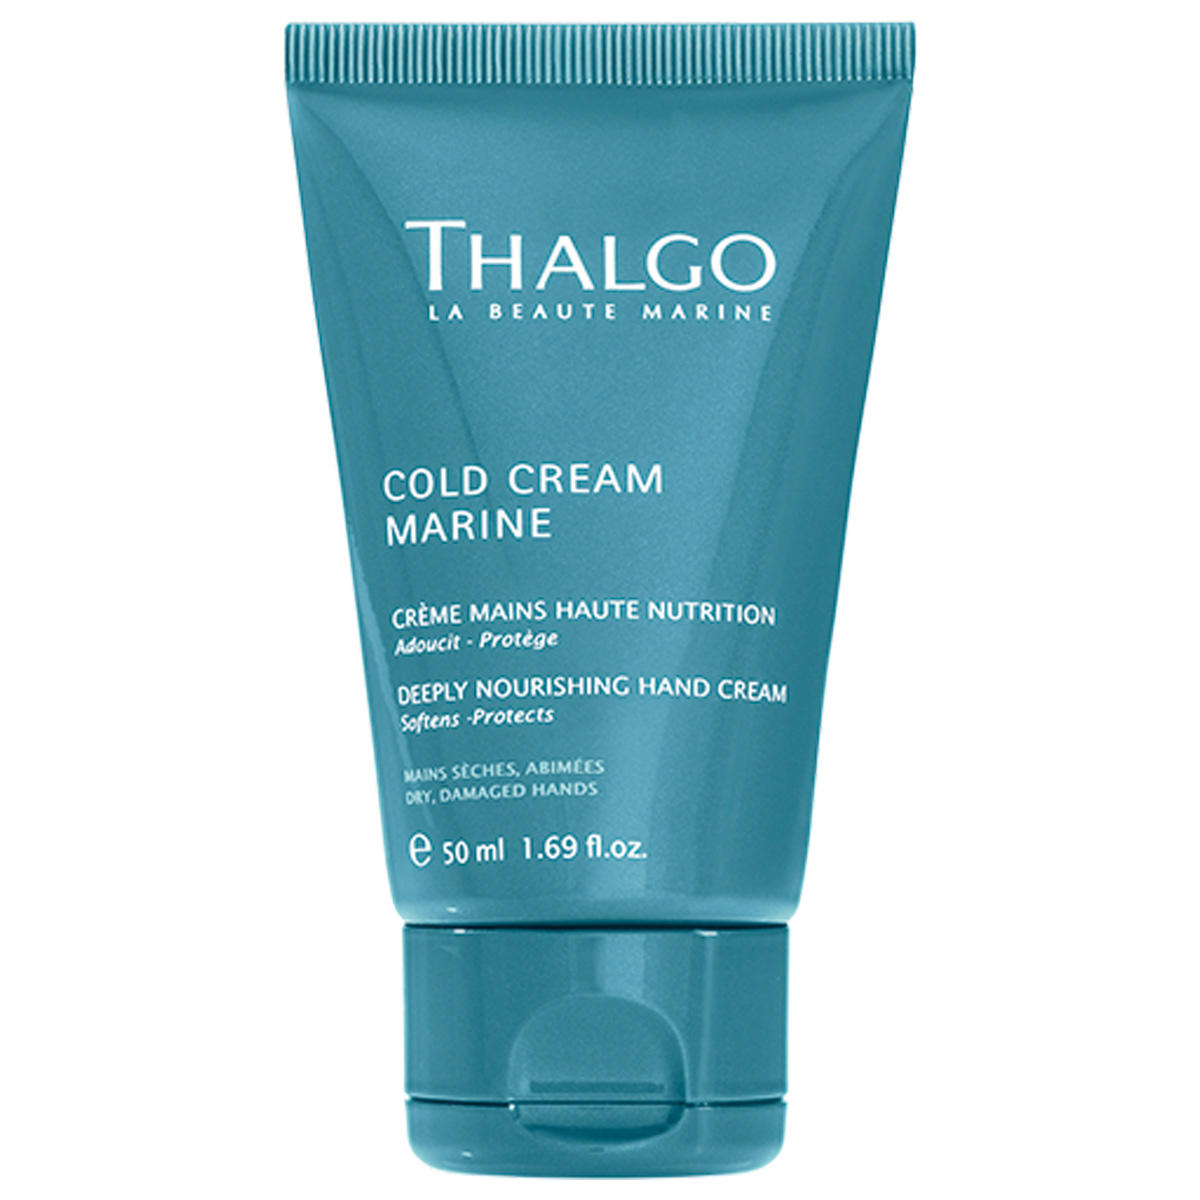 THALGO COLD CREAM MARINE Moisturizing hand cream 50 ml - 1